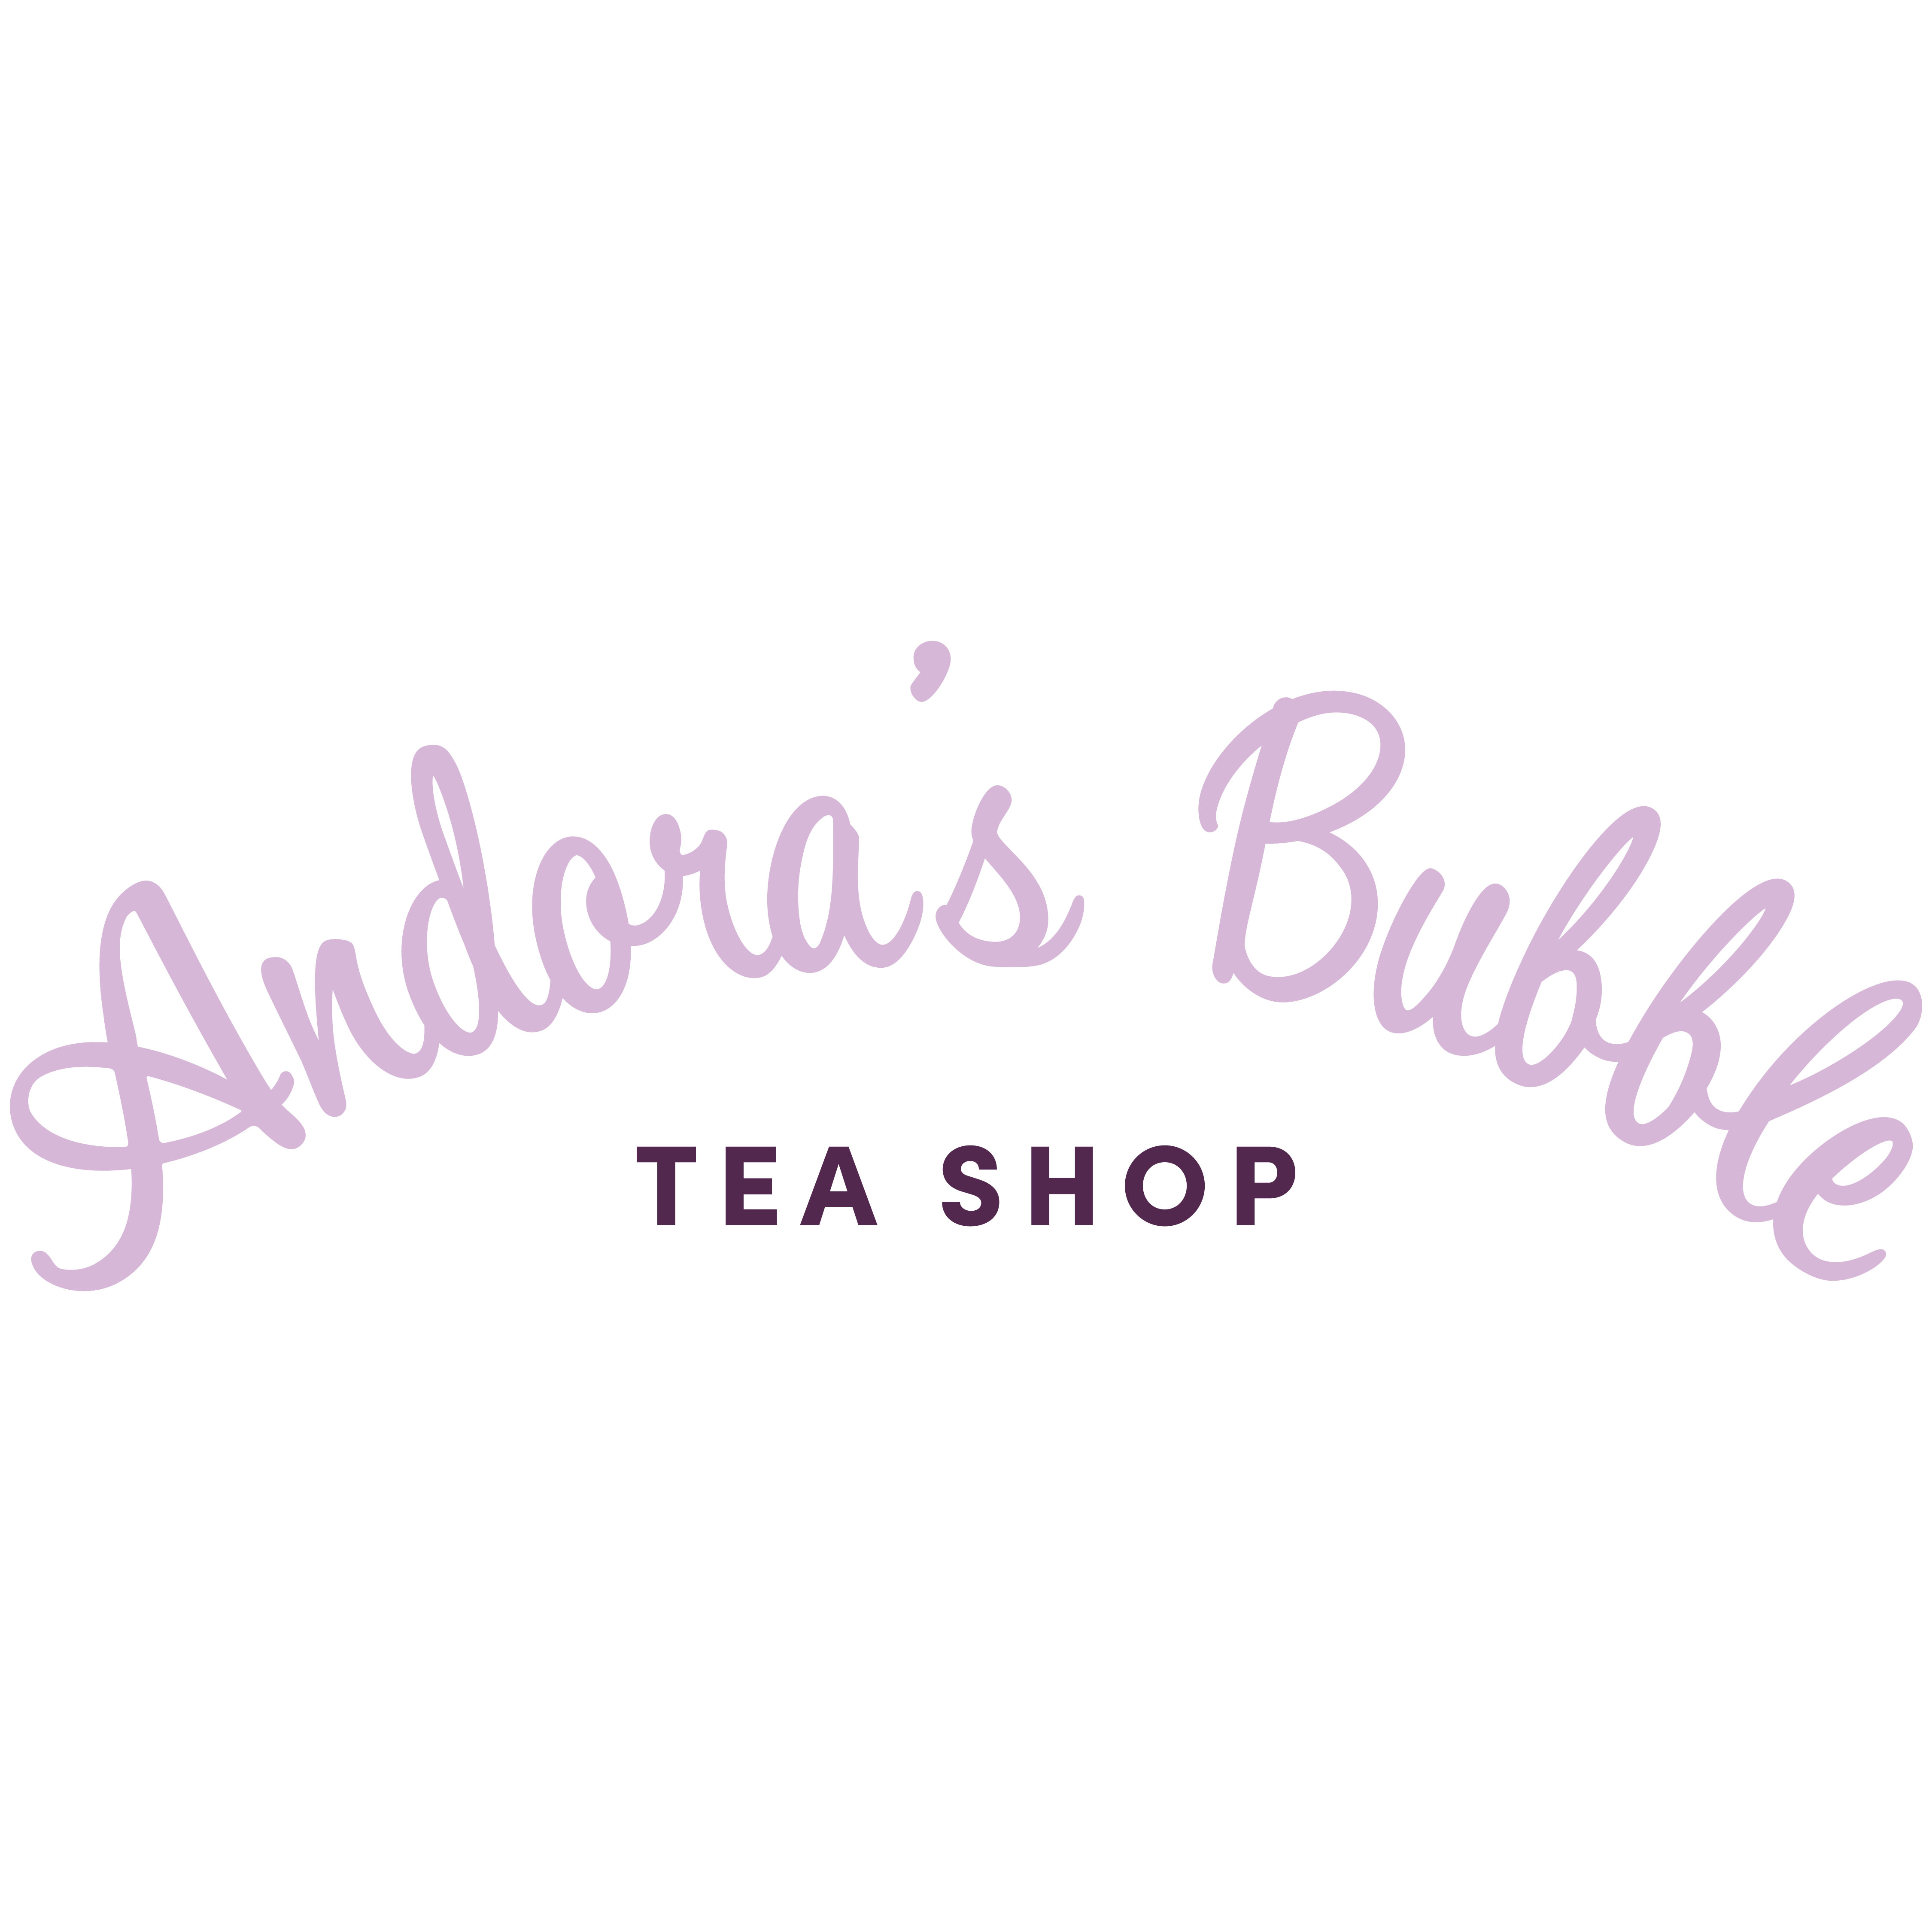 Andora's Bubble Tea Shop